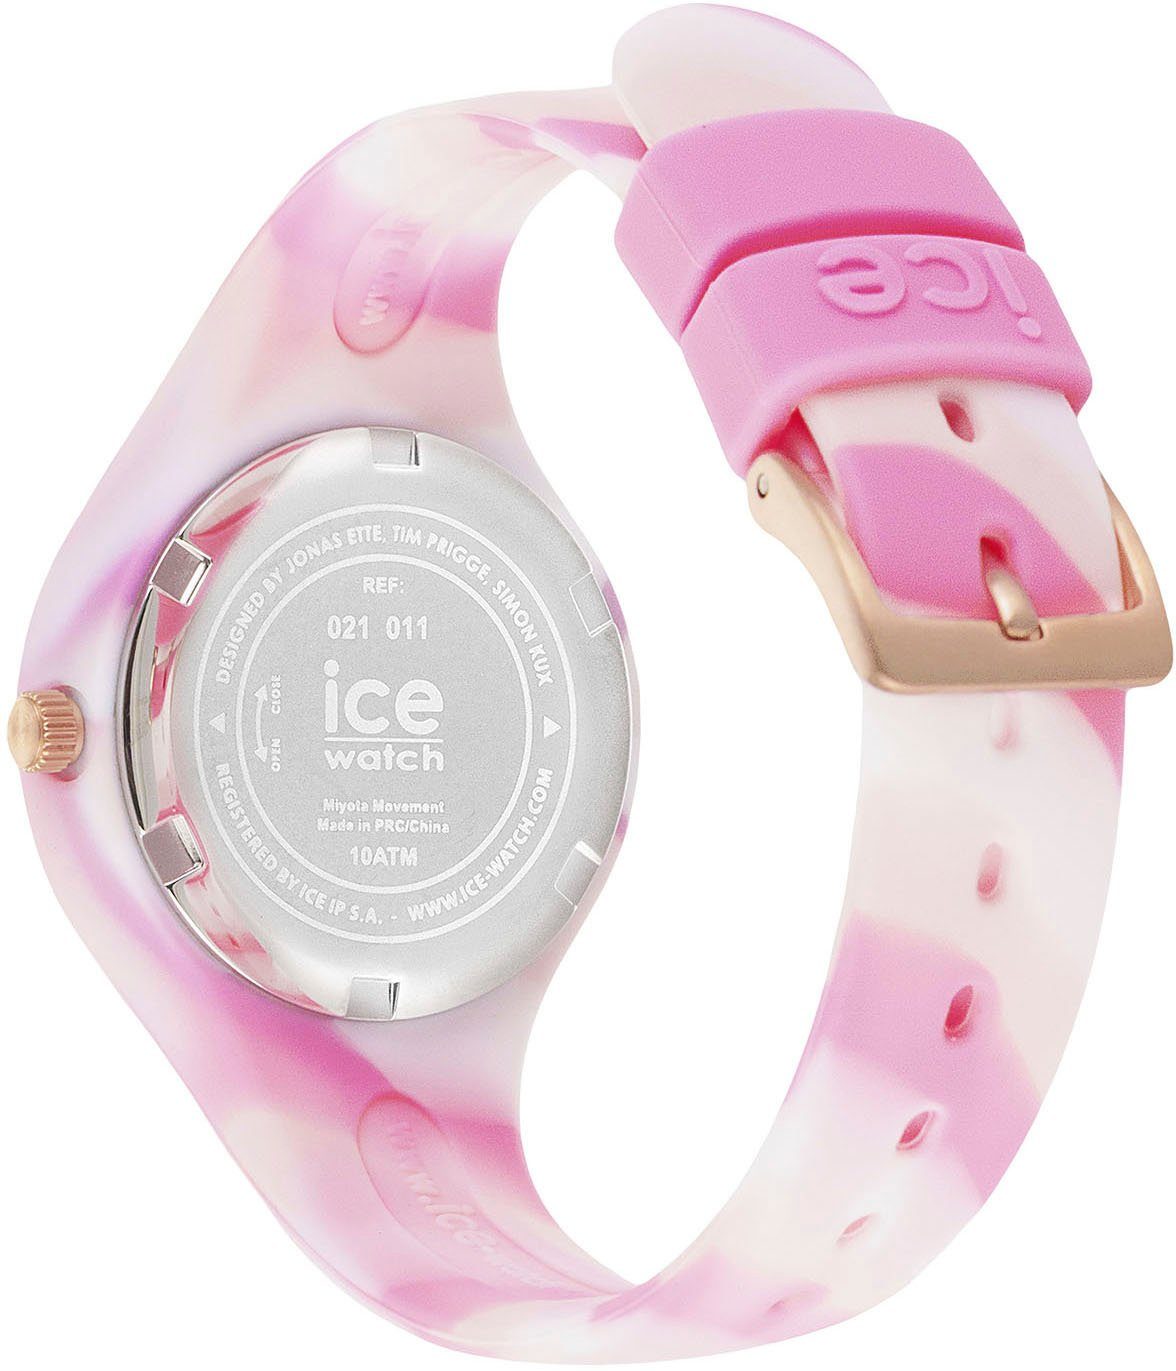 ice-watch Quarzuhr ICE auch als shades - Pink dye ideal - Geschenk and 021011, 3H, tie - Extra-Small